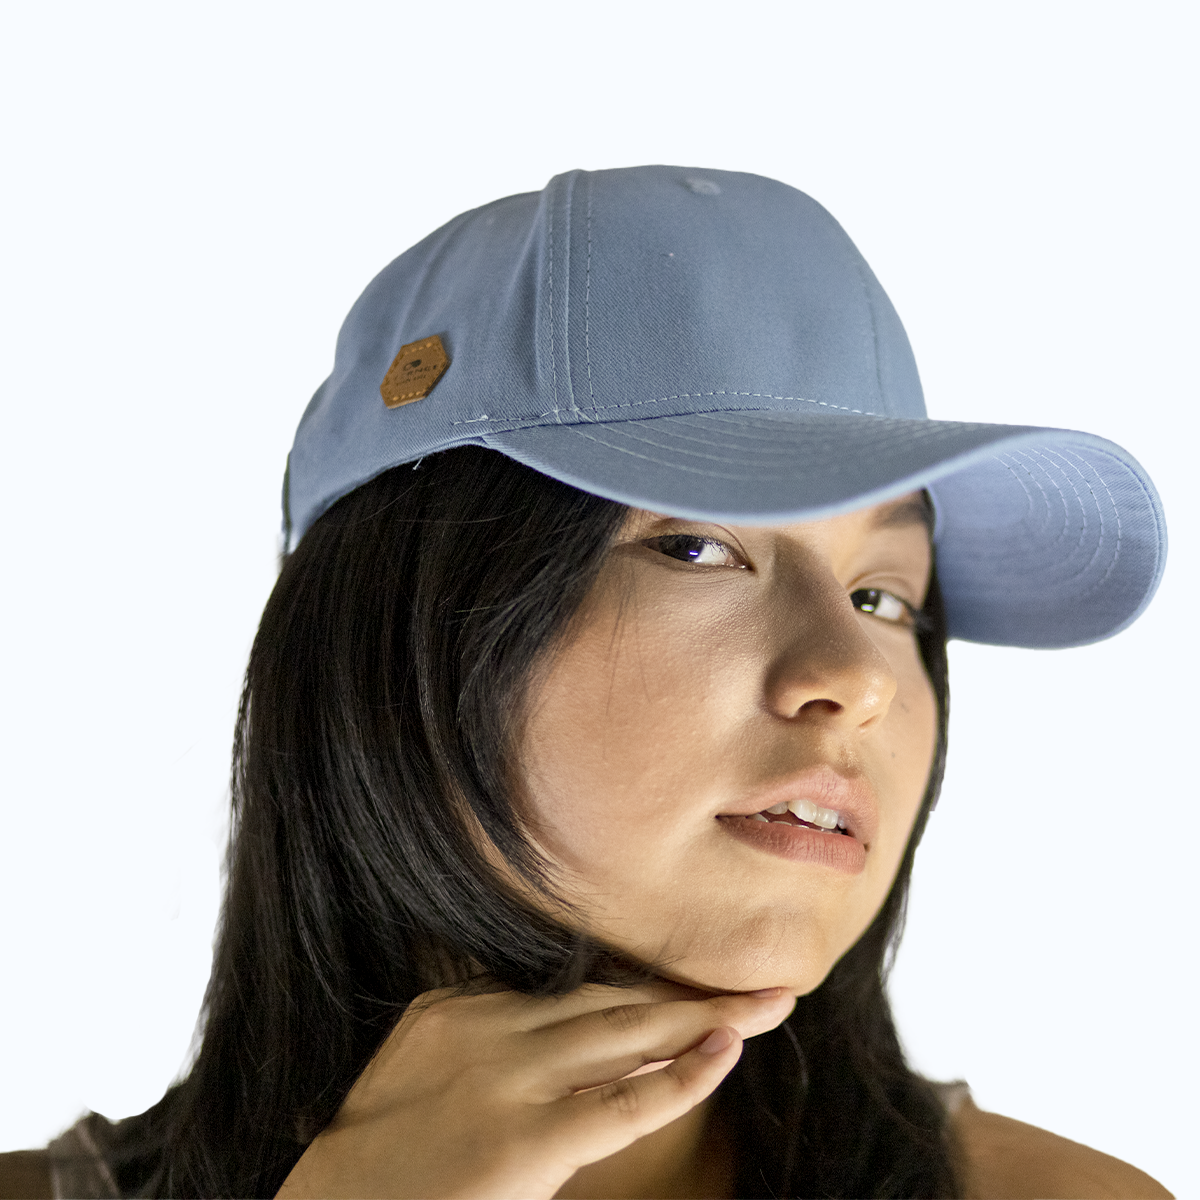 snow cap strain women baseball hats 